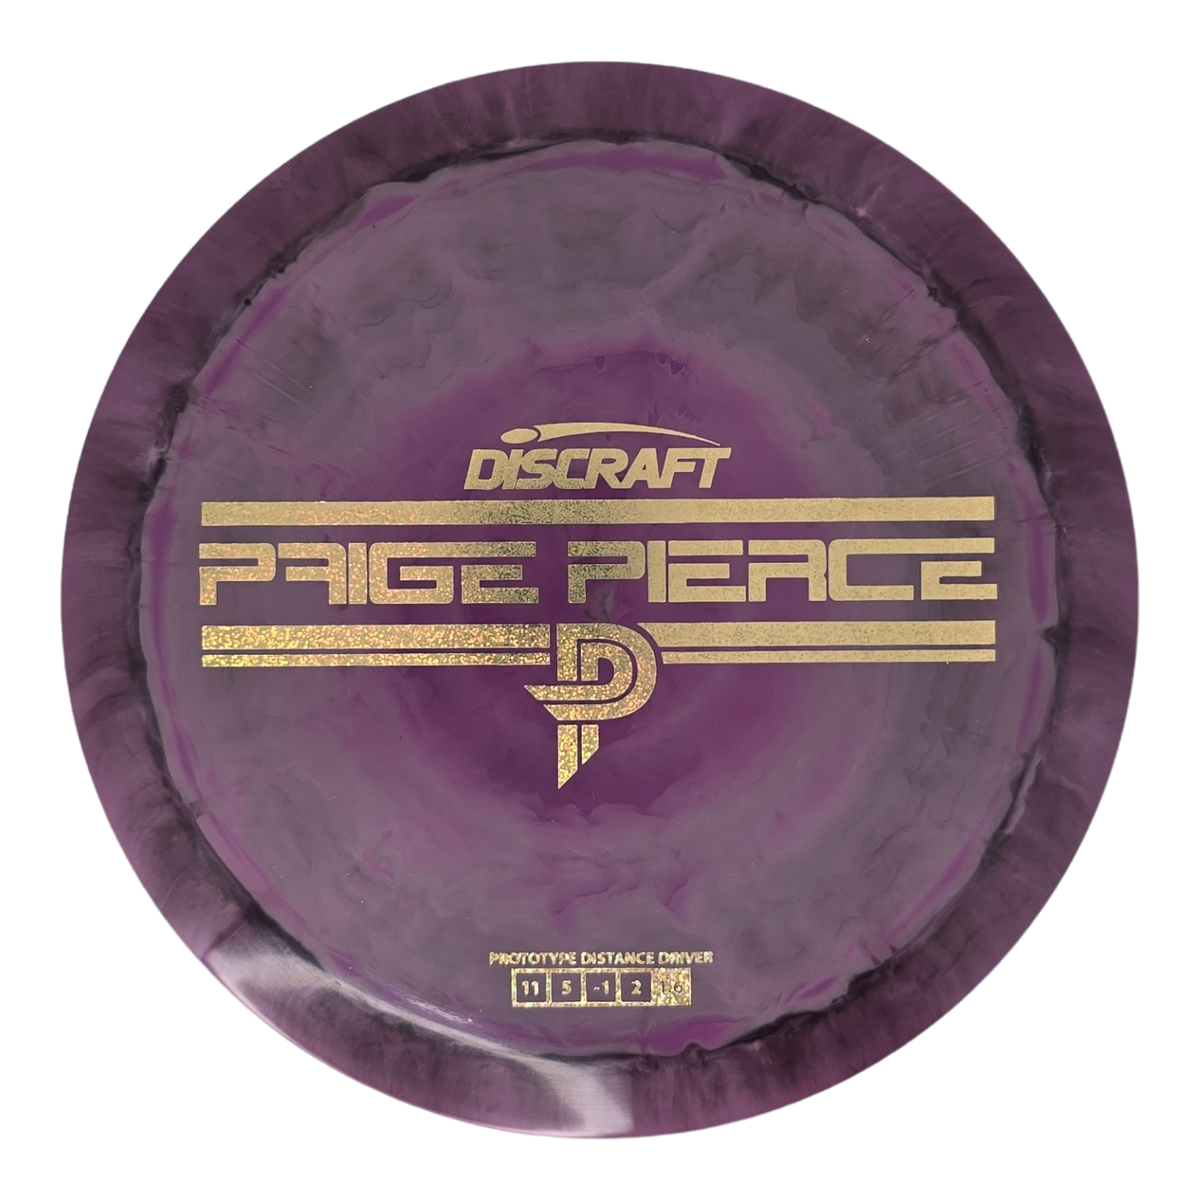 Discraft Paige Pierce ESP Drive - Prototype